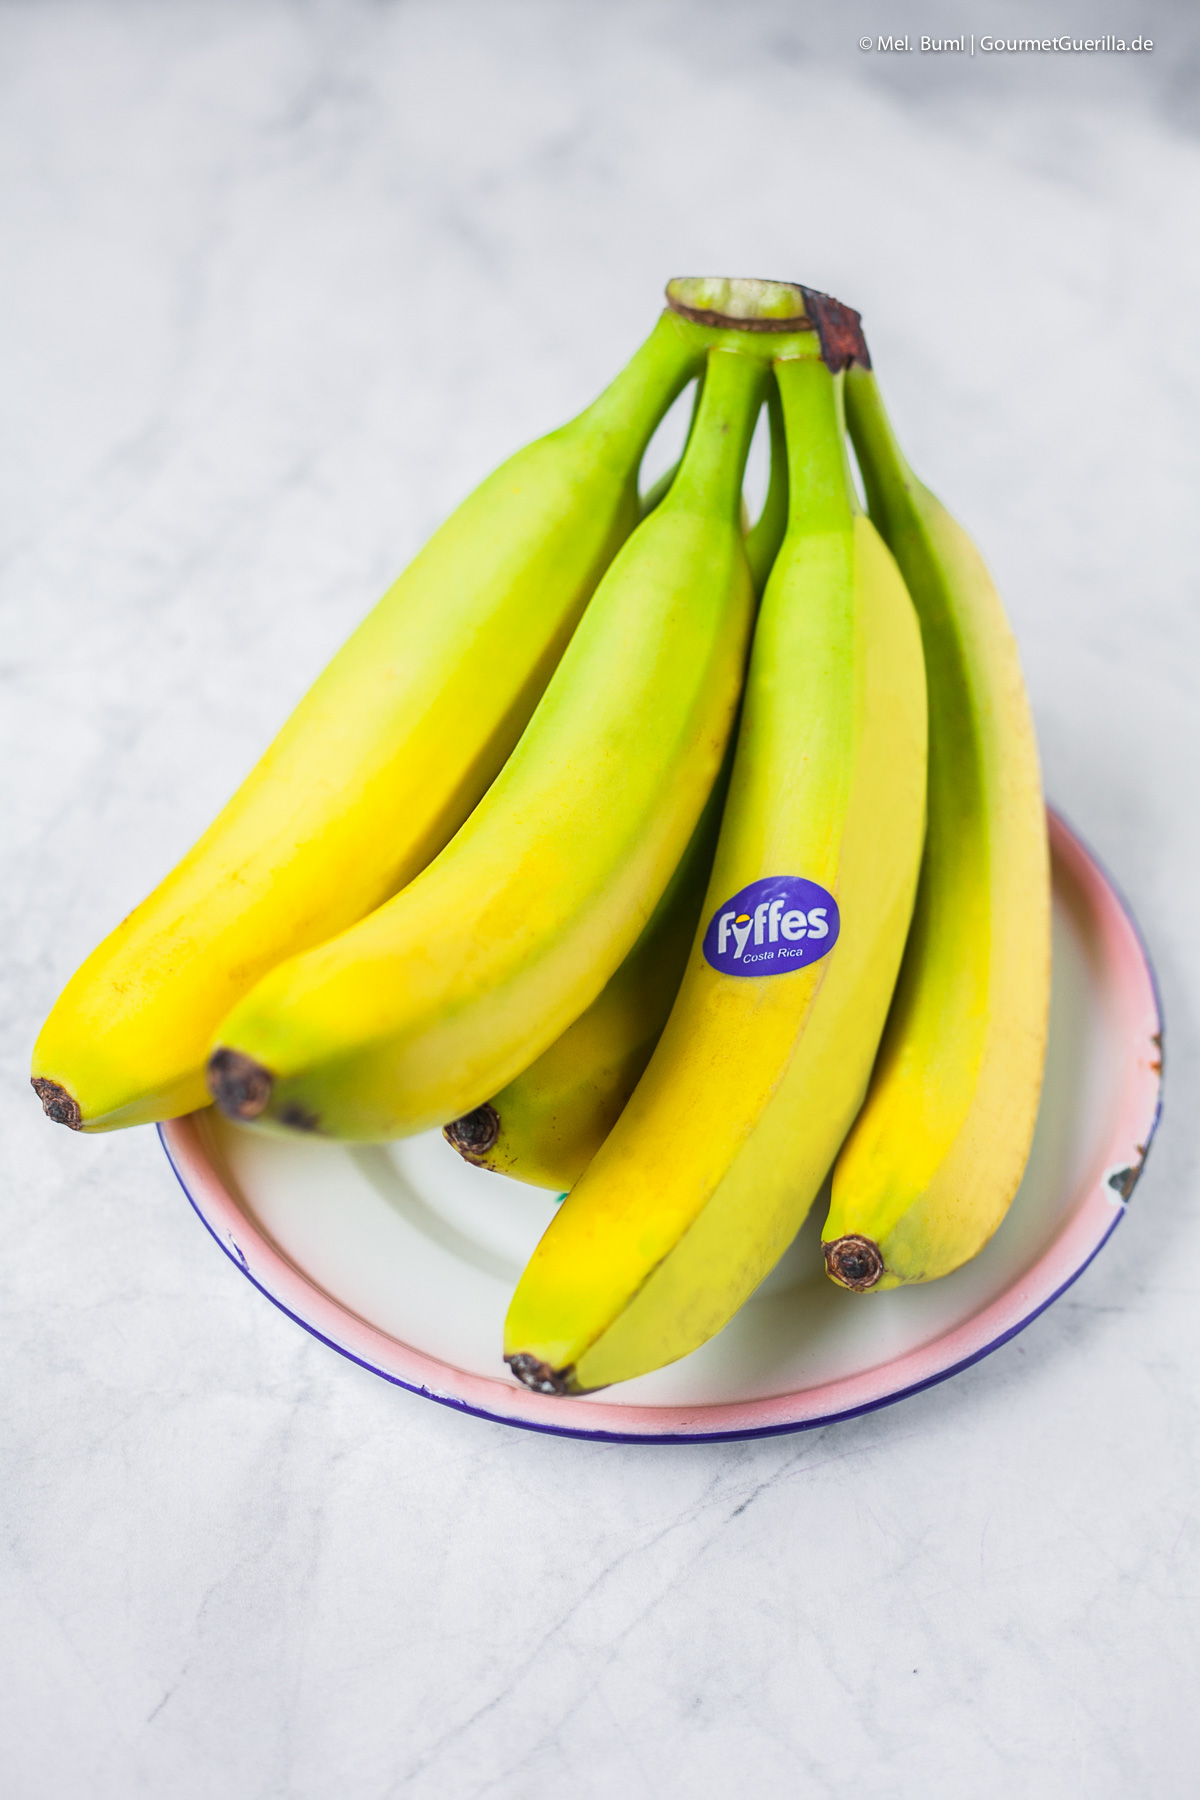 Fyffes Bananas | GourmtGuerilla.com